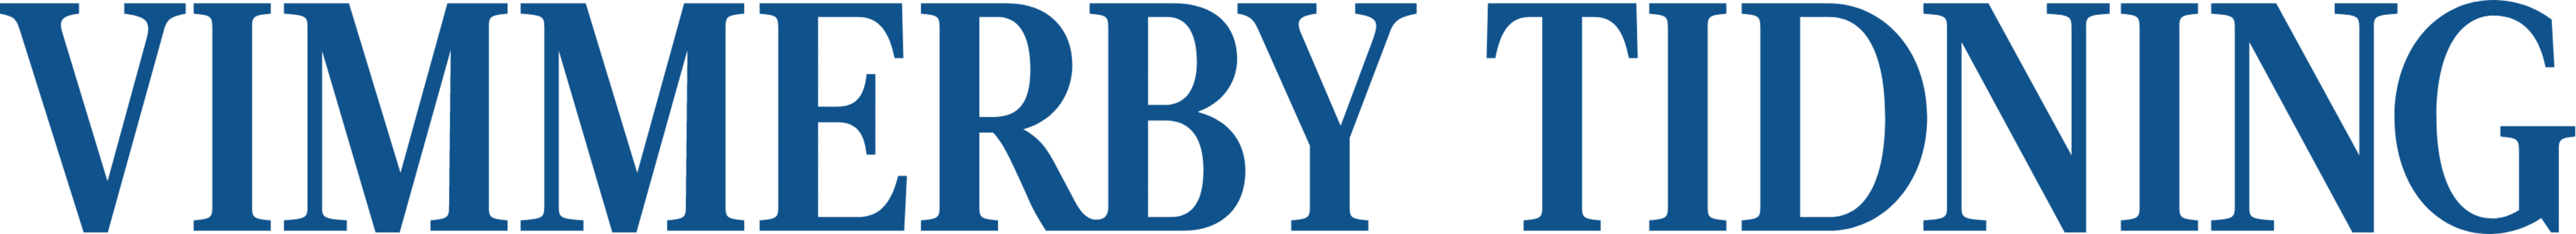 Vimmerby Tidning logo